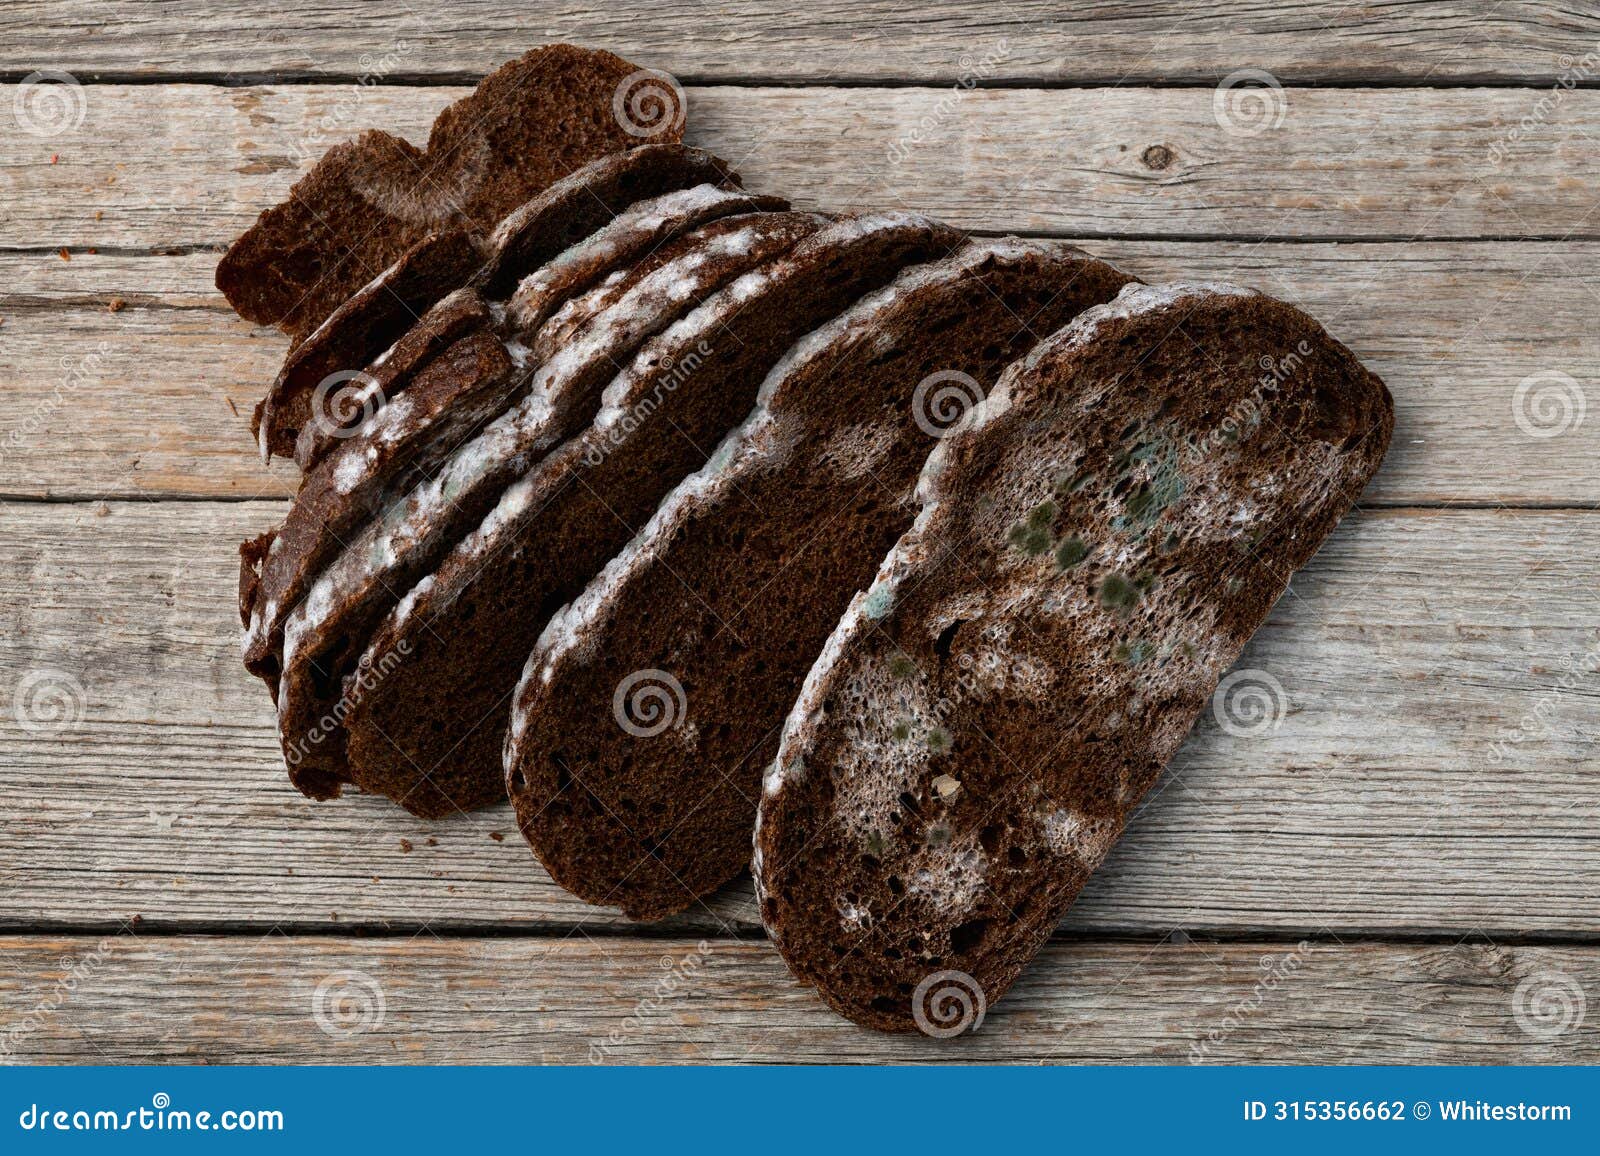 piece of dark molded bread